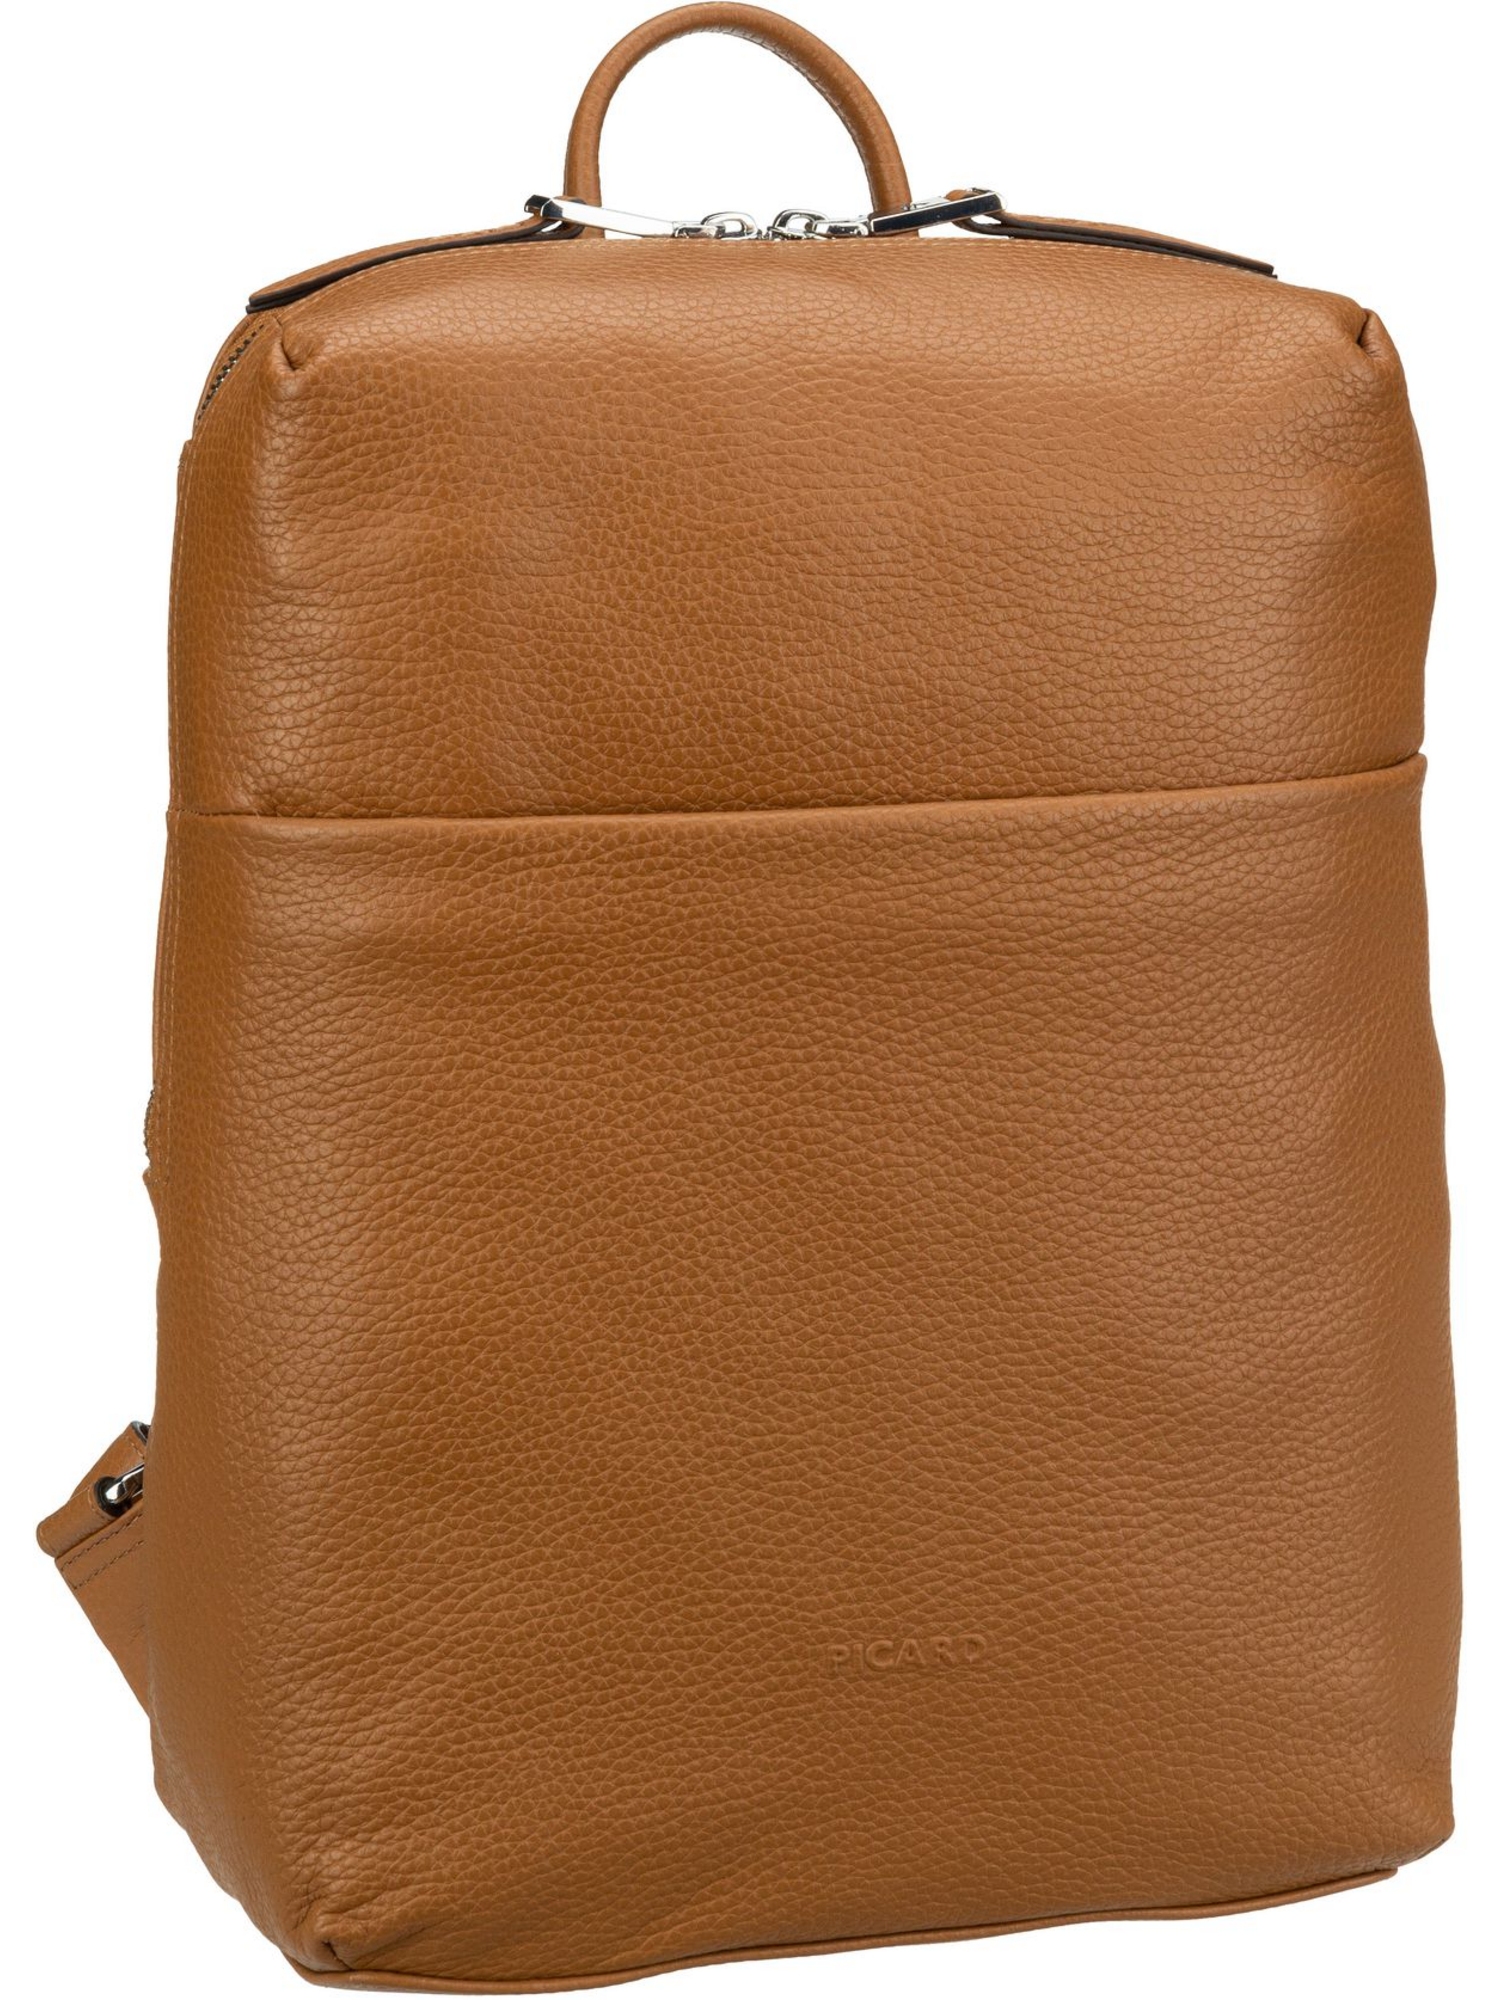 Рюкзак PICARD/Backpack Pure 7997, коньячный